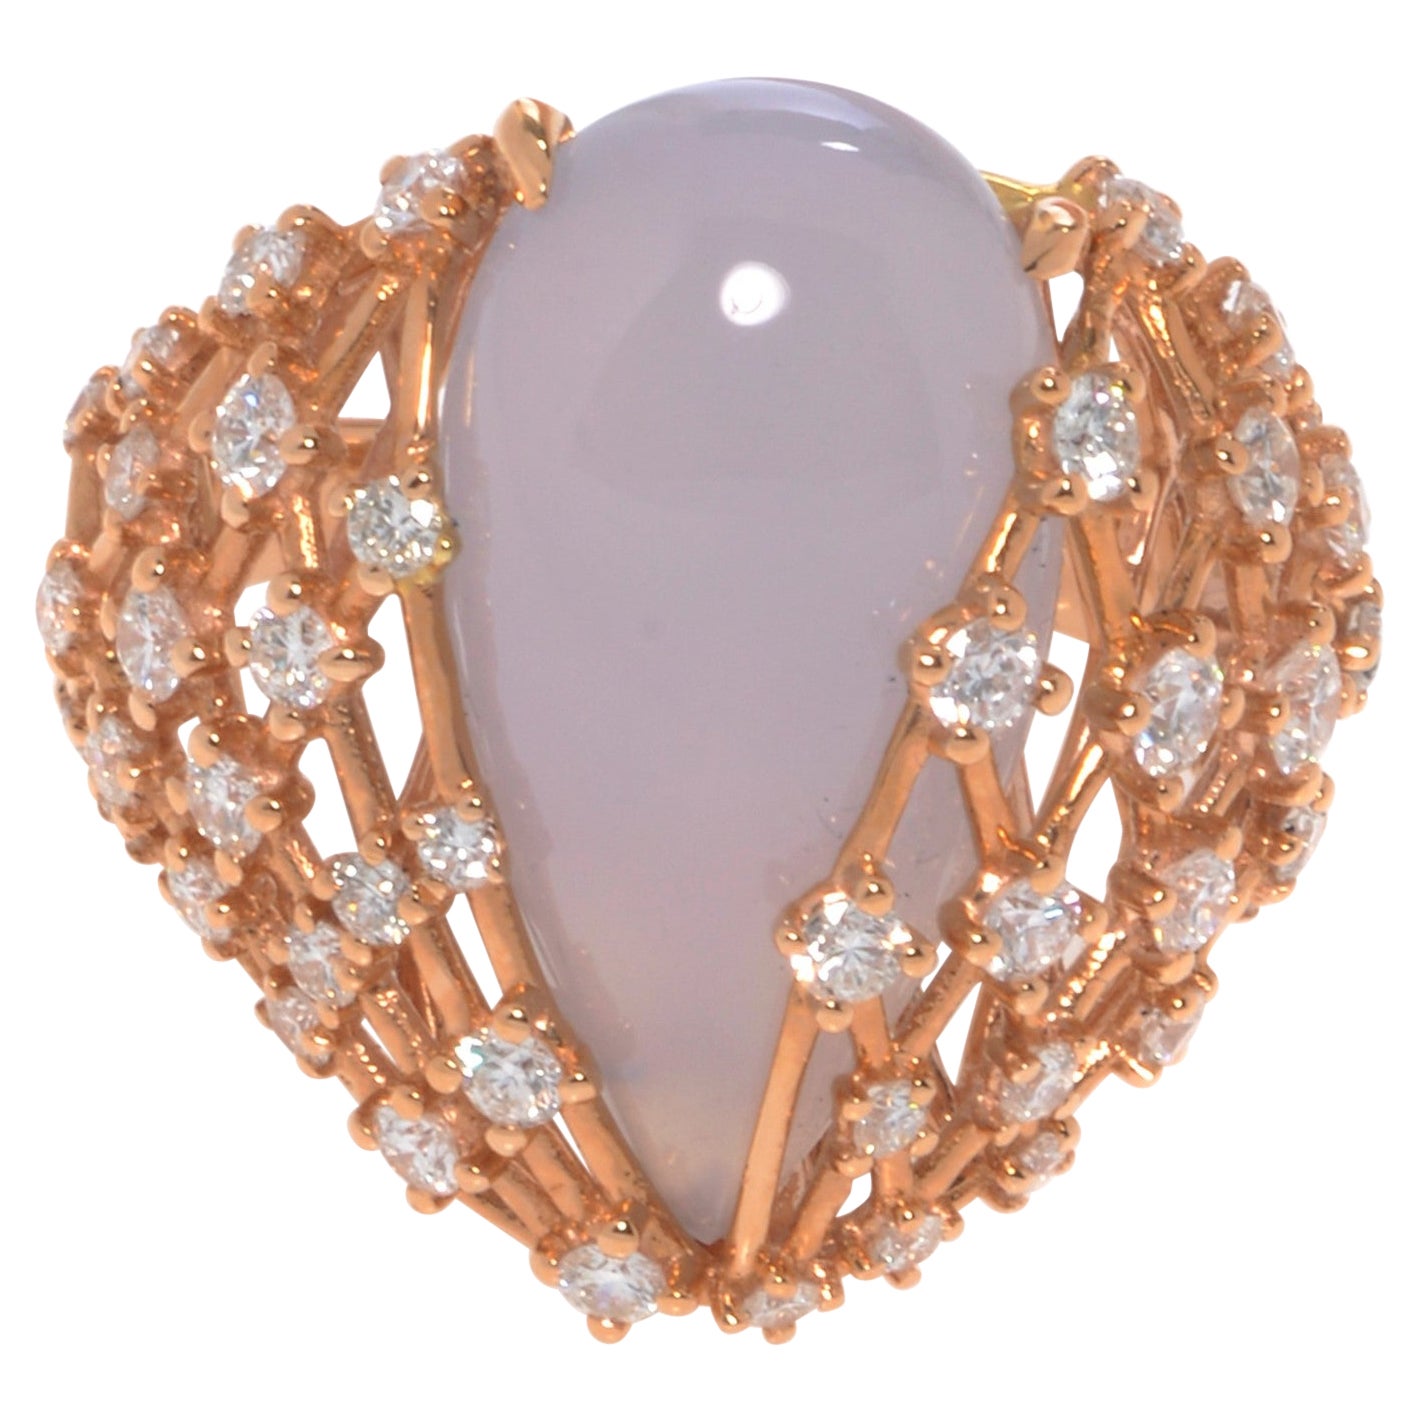 Luca Carati Chalcedony Gemstone Diamond Ring 18K Yellow Gold 1.25Cttw Size 7.5